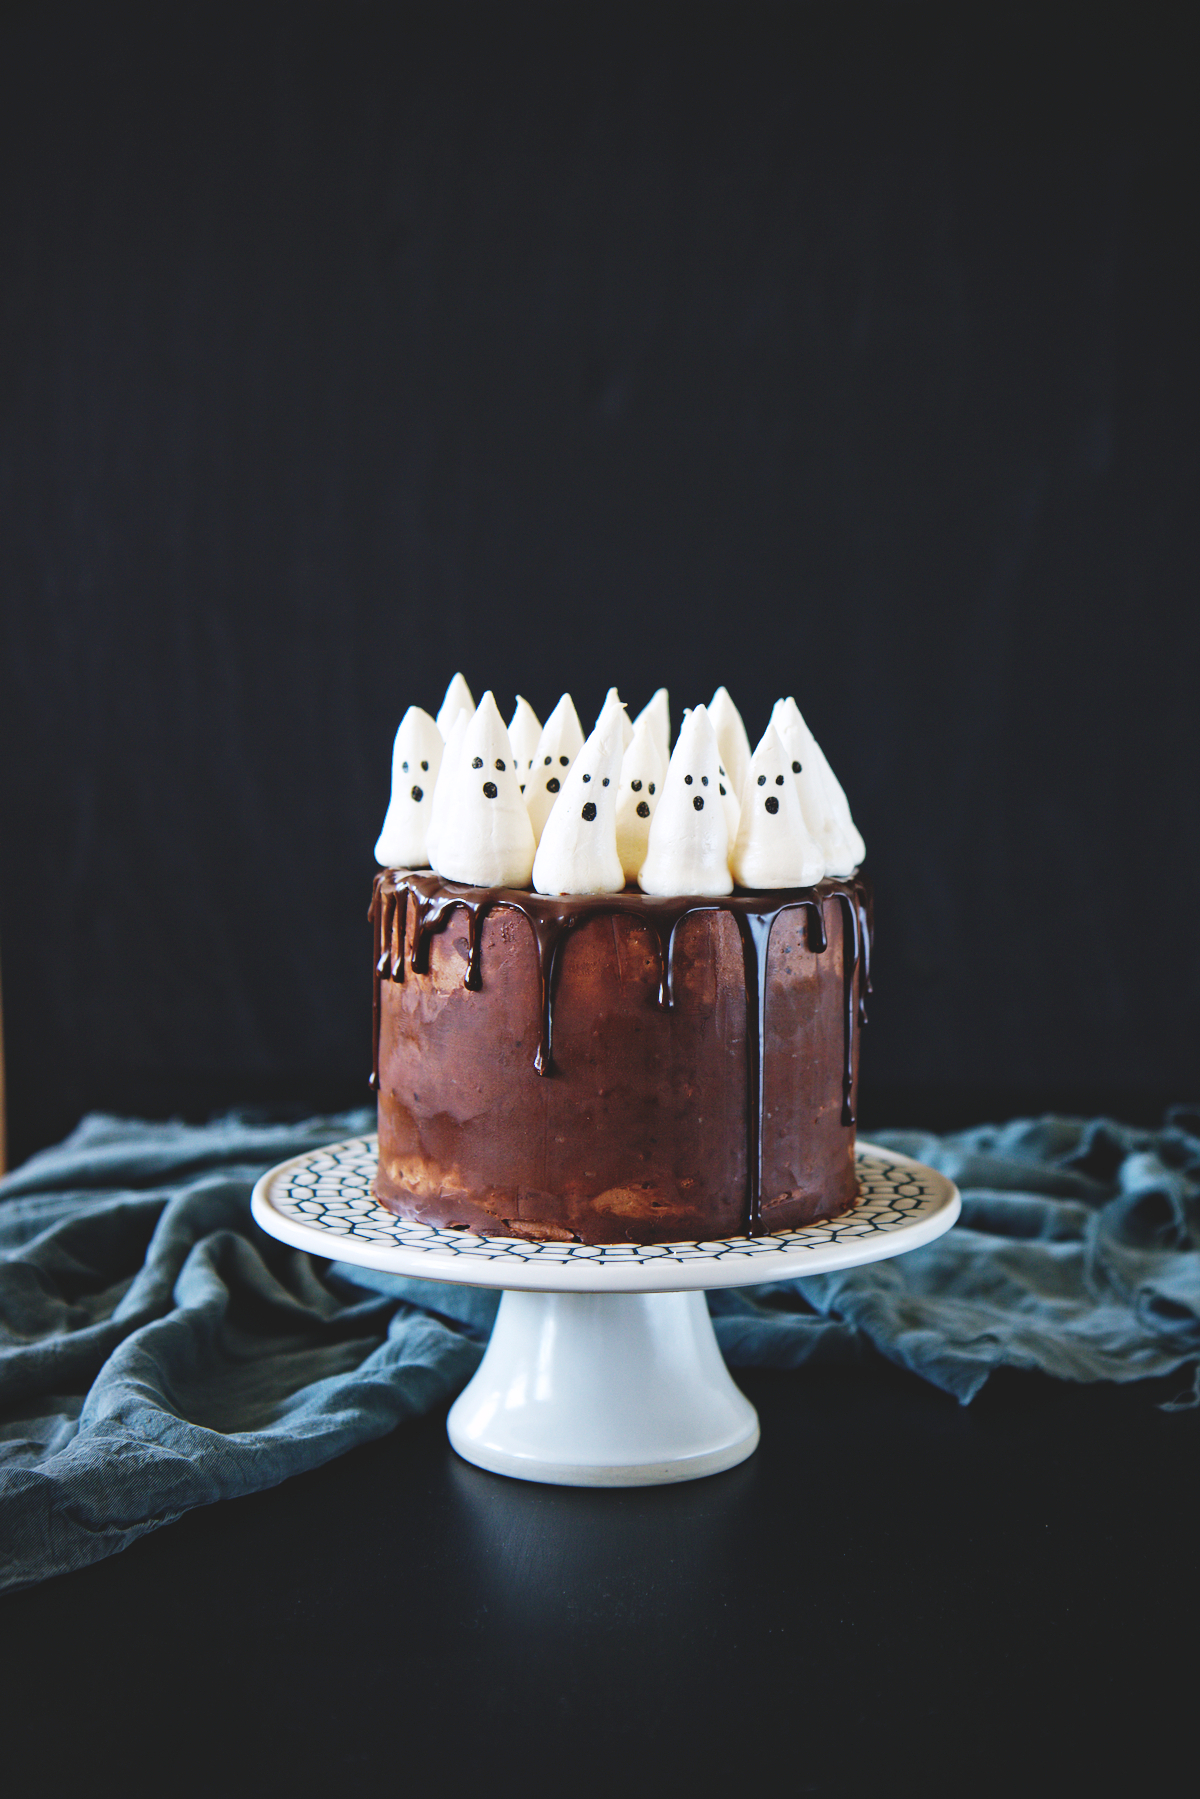 Image of Little quickfire cake with chocolate ganache glaze